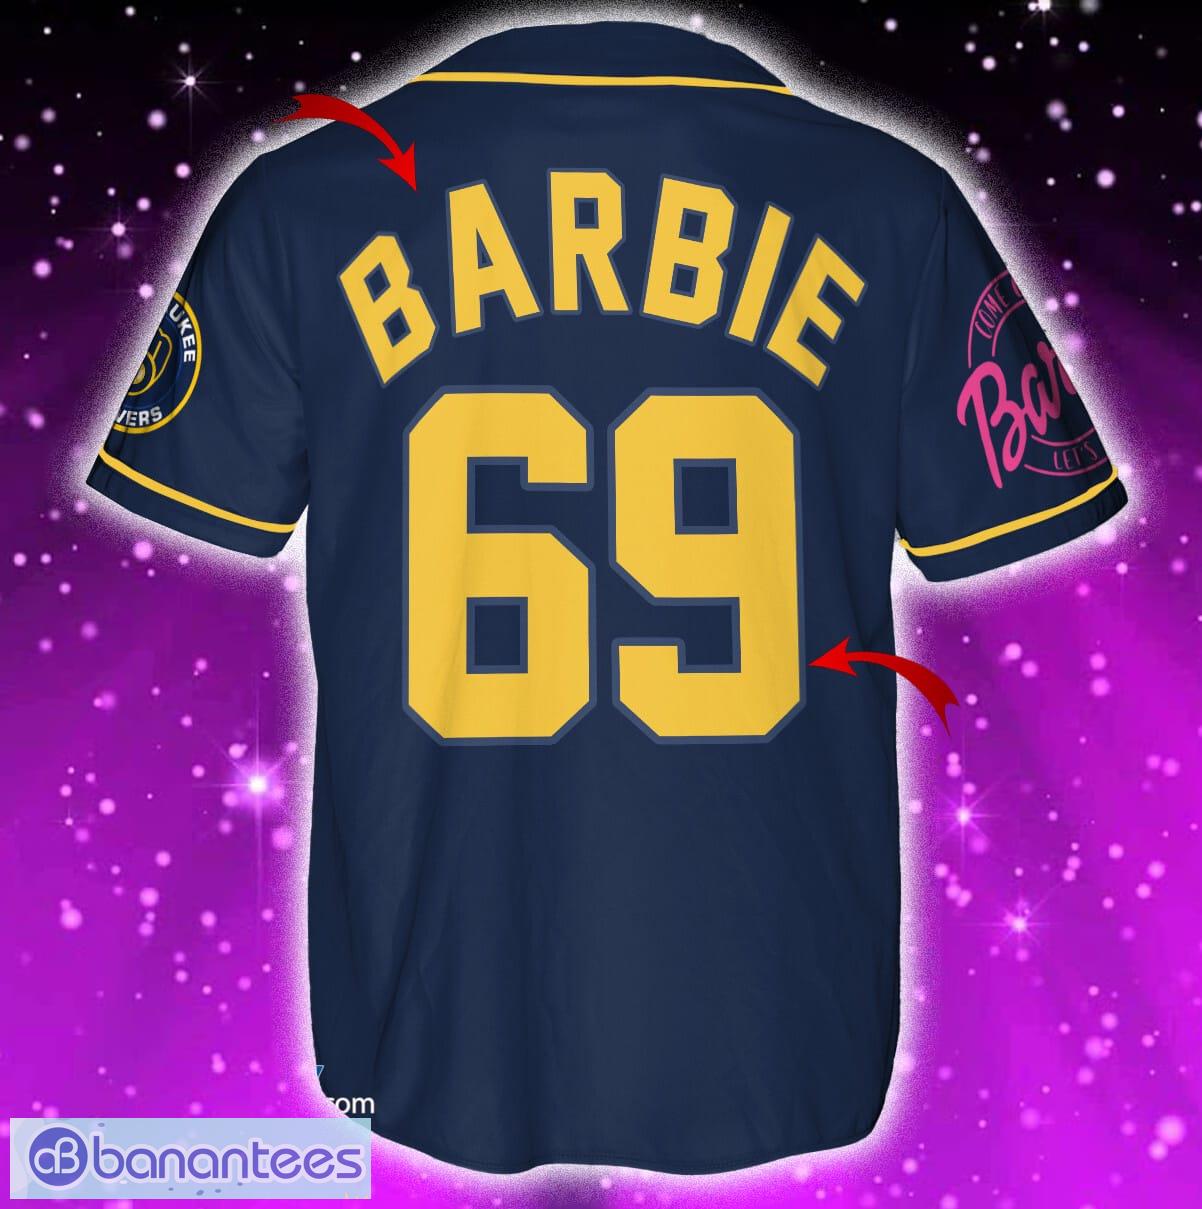 Milwaukee Brewers Barbie Jersey Baseball Shirt Cream Custom Number And Name  - Banantees